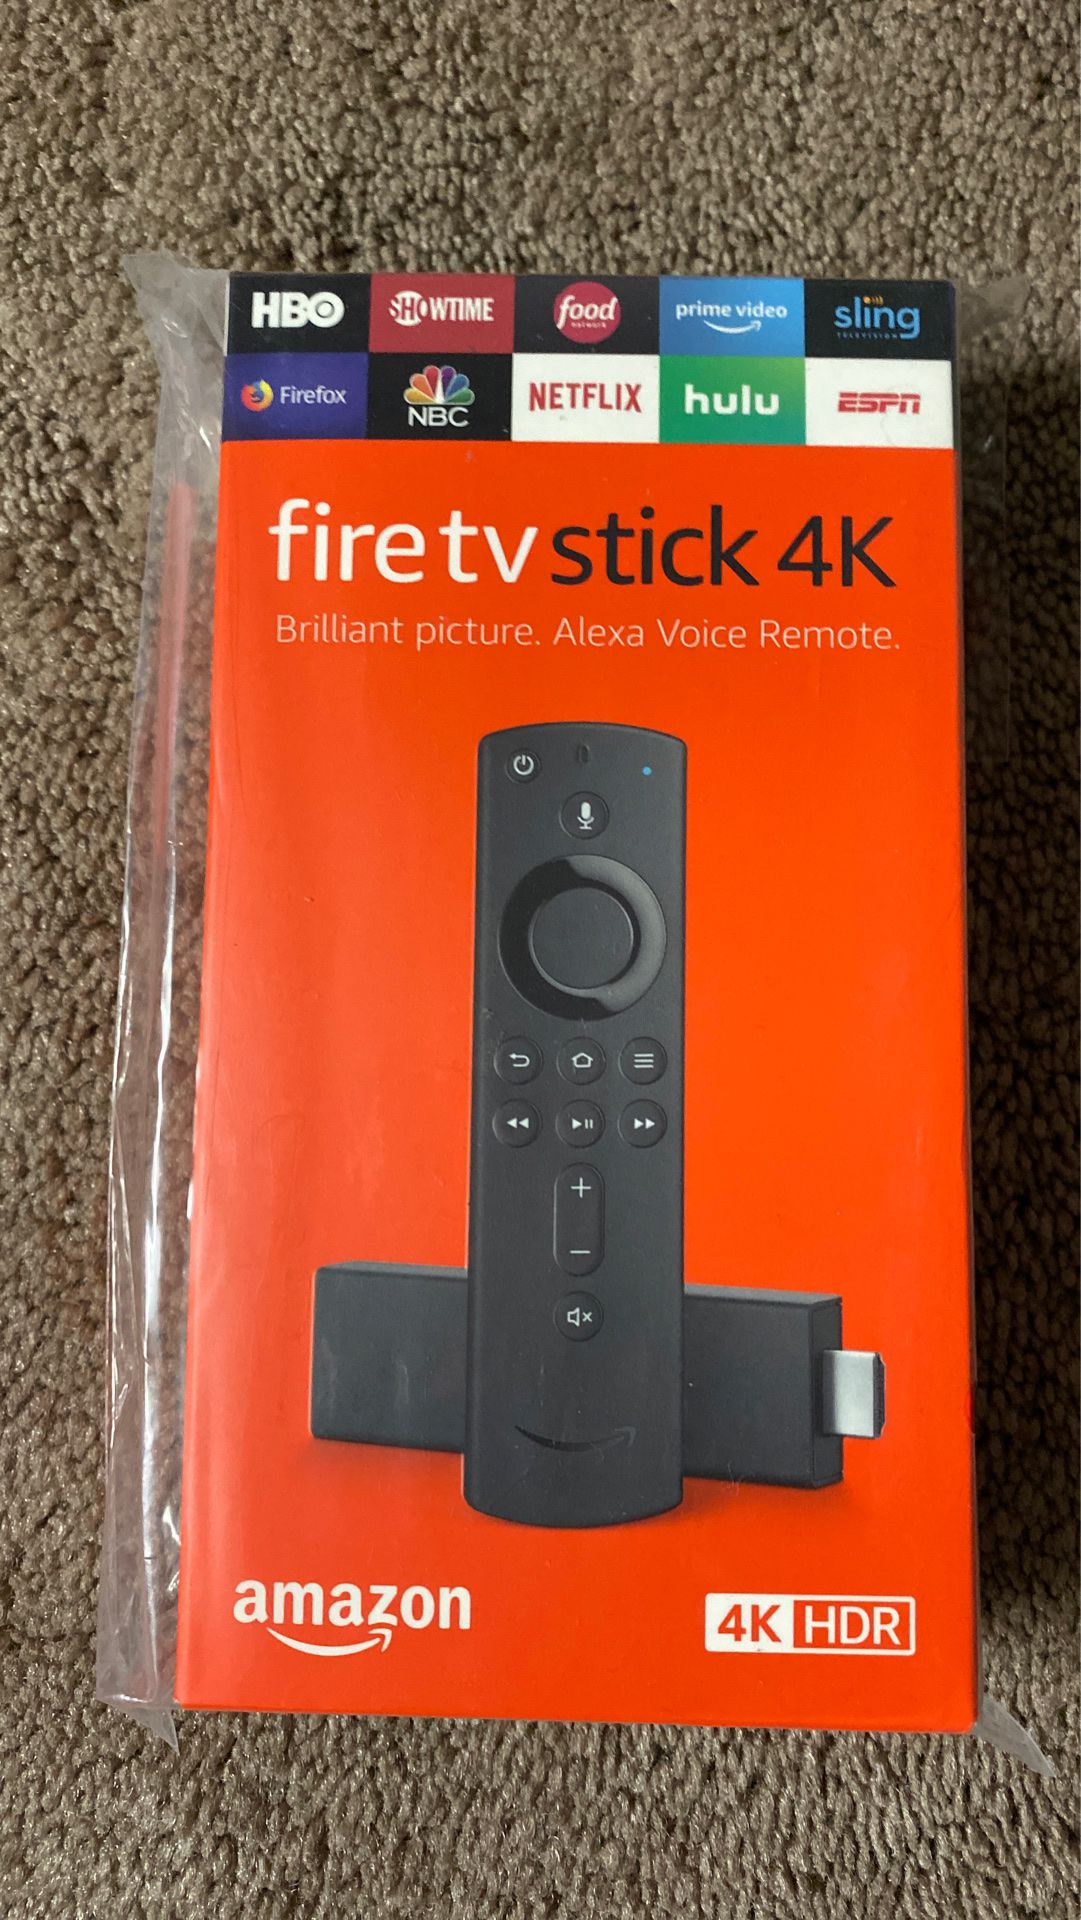 Amazon fire tv stick 4K HDR - Brand New